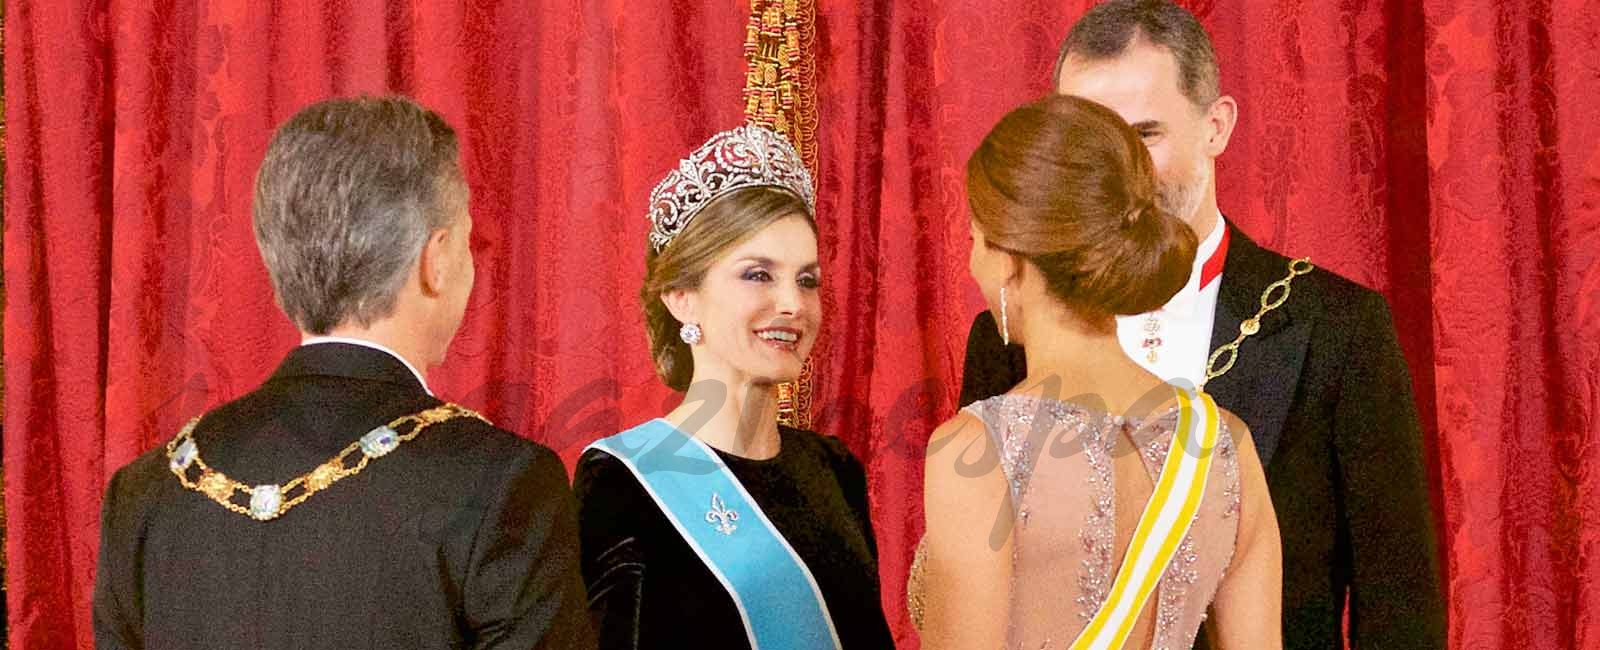 La elegancia de la reina Letizia y Juliana Awada, de gala